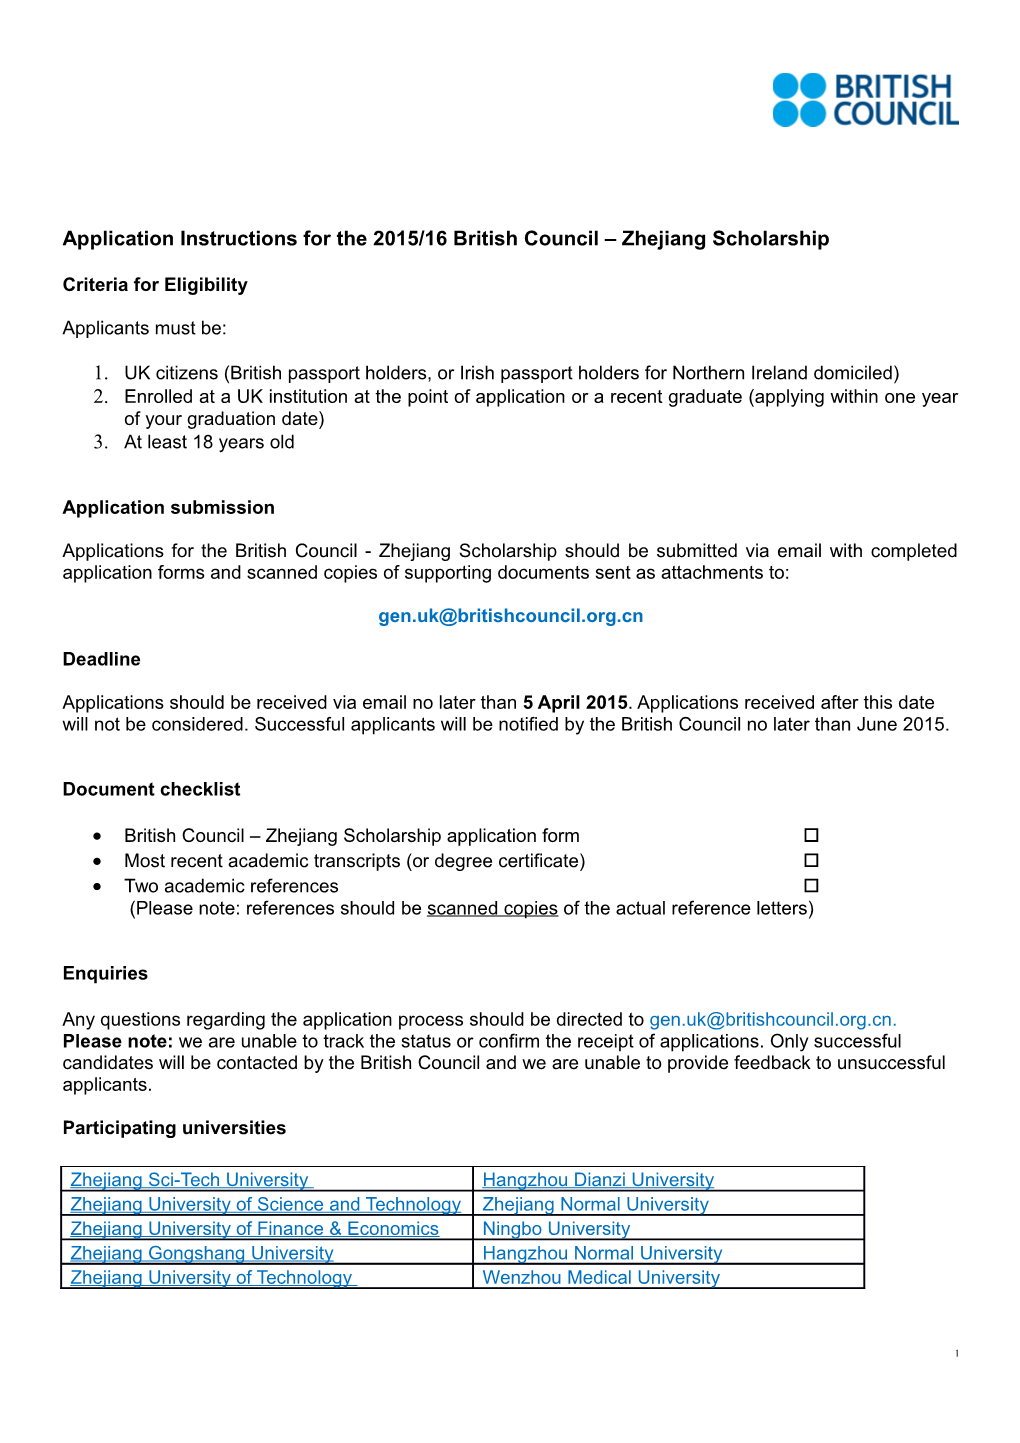 Application Instructions for the 2015/16 British Council Zhejiang Scholarship